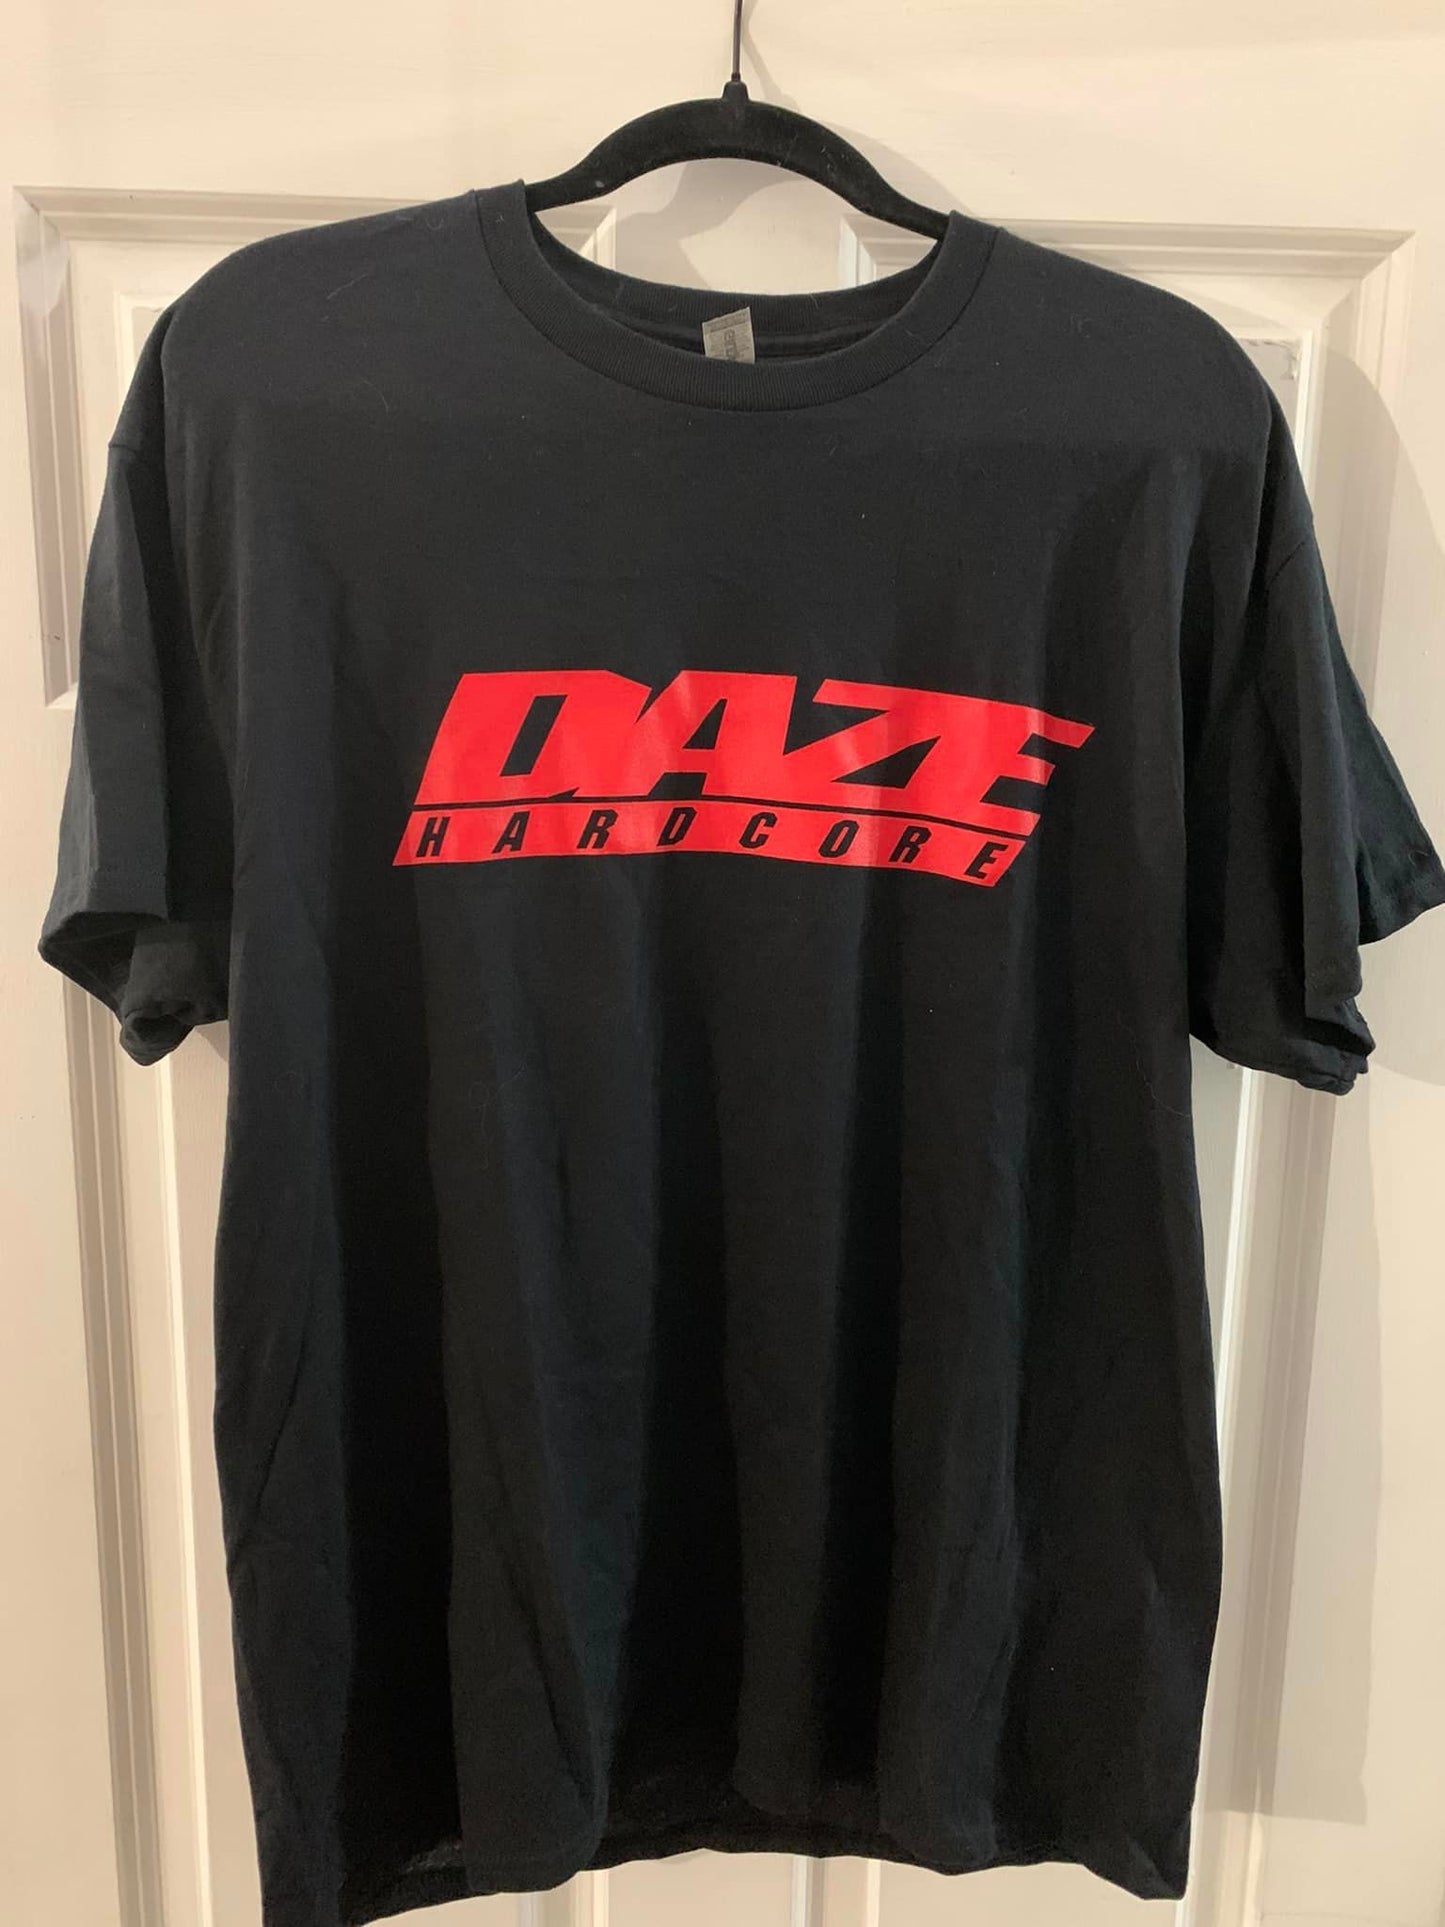 Daze Hardcore - Shirt (Black/Red)